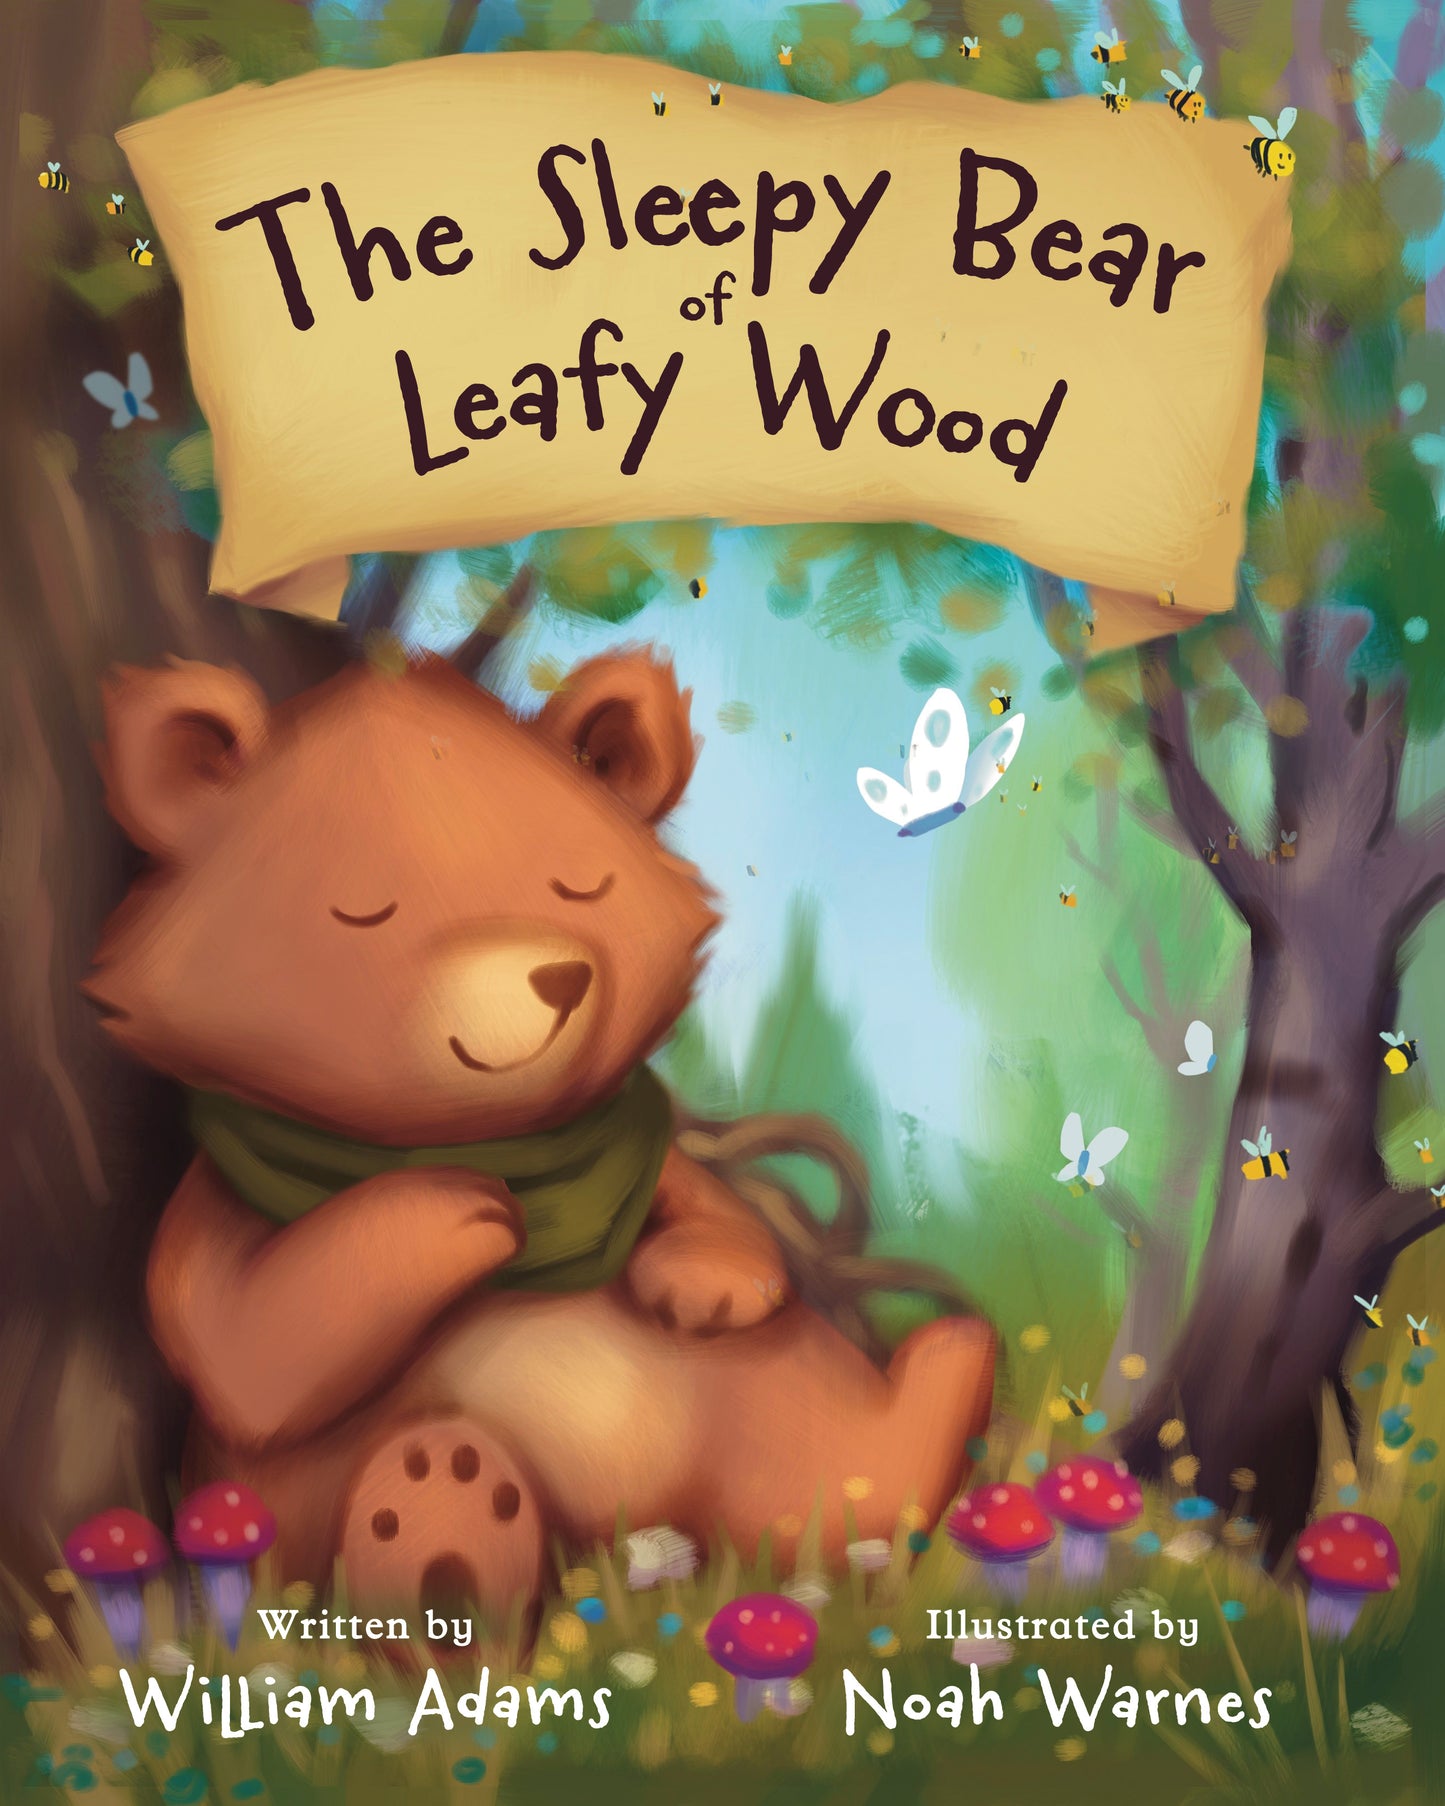 The Sleepy Bear of Leafy Wood